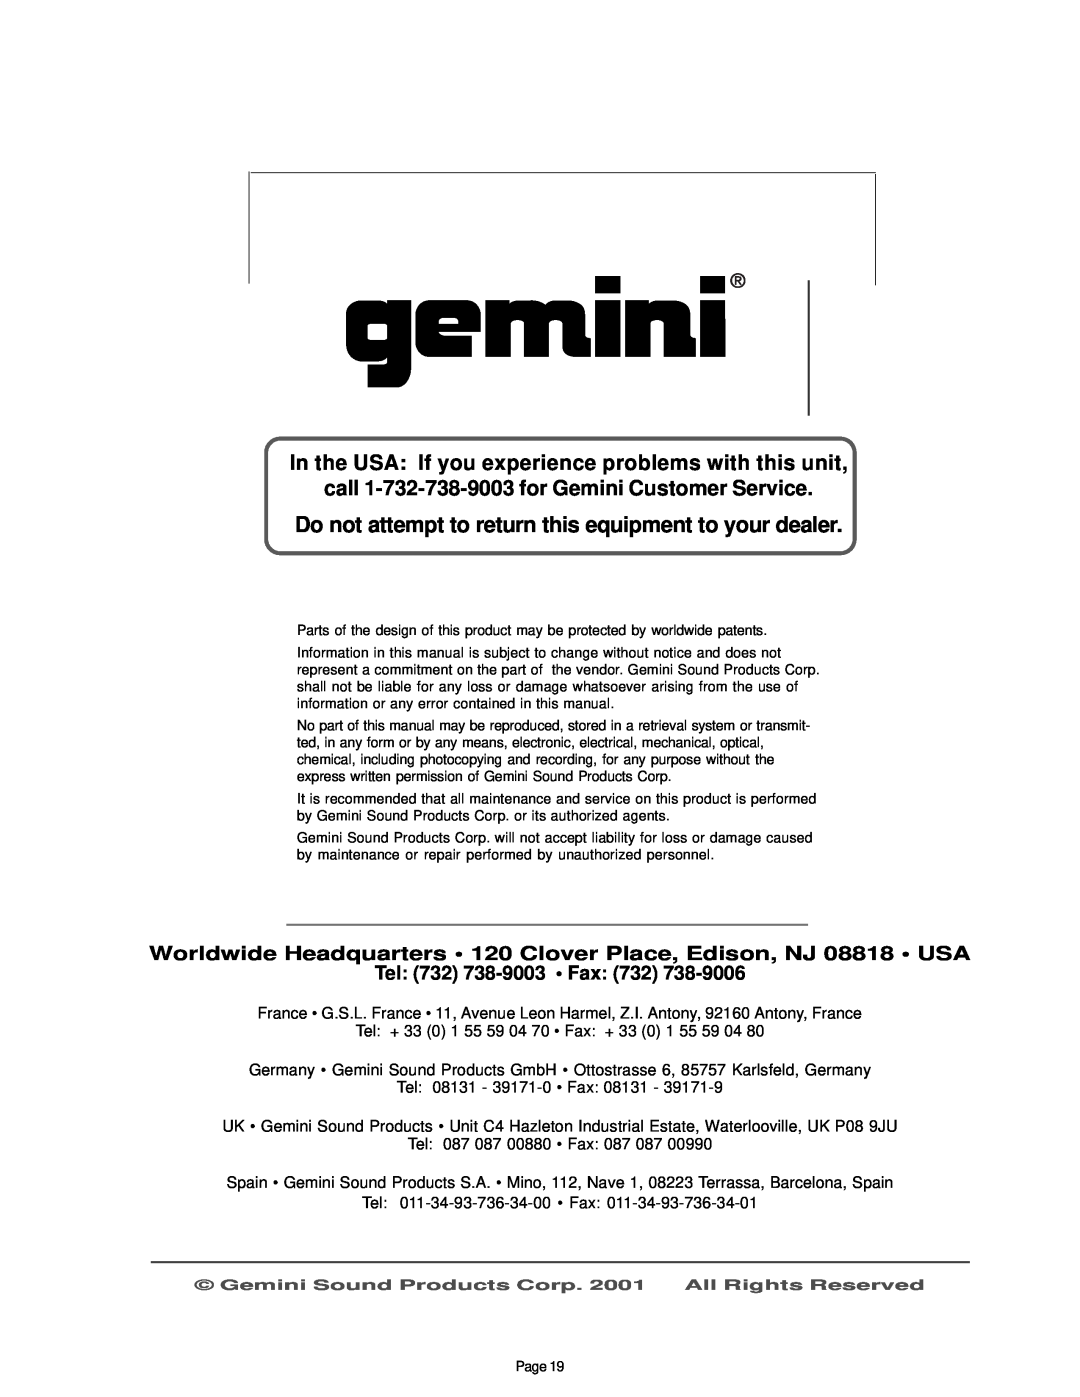 Gemini PT-1000 II manual call 1-732-738-9003for Gemini Customer Service, Tel 732 738-9003 Fax 